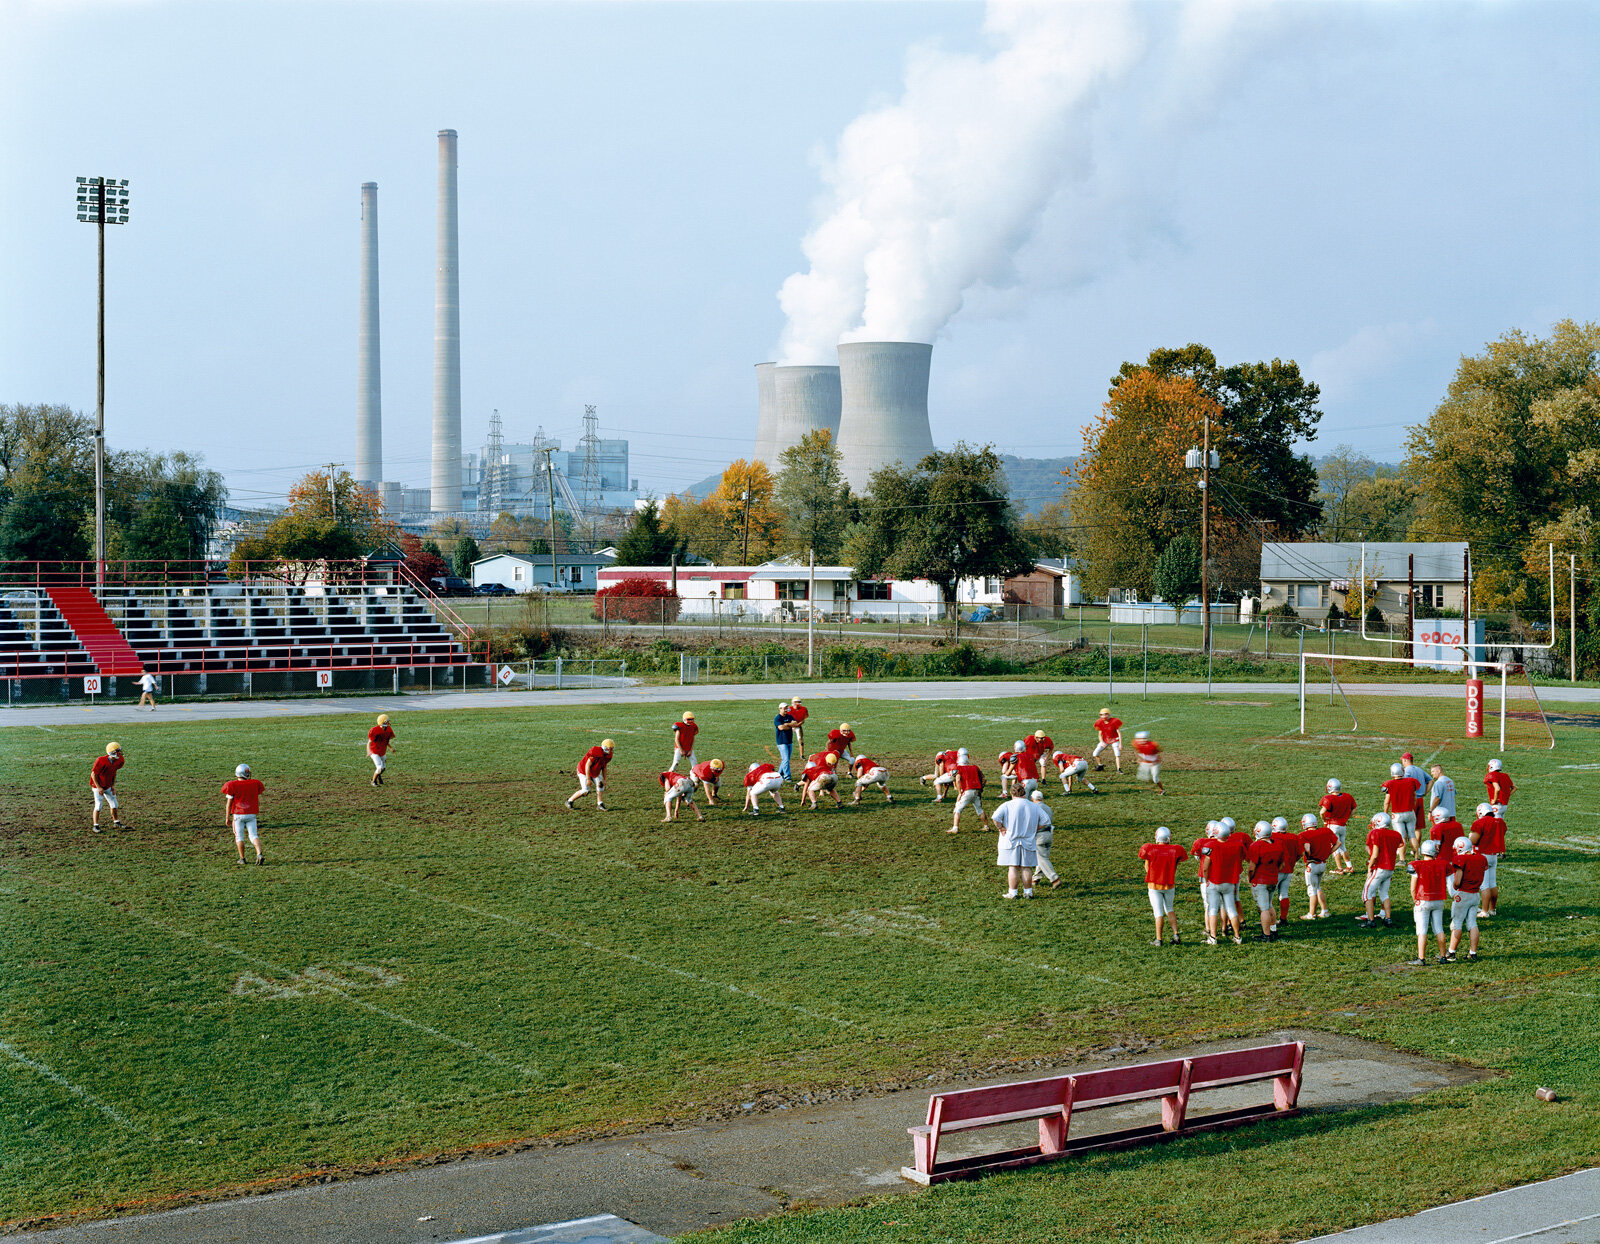  Poca High School and Amos Coal Power Plant, West Virginia 2004 